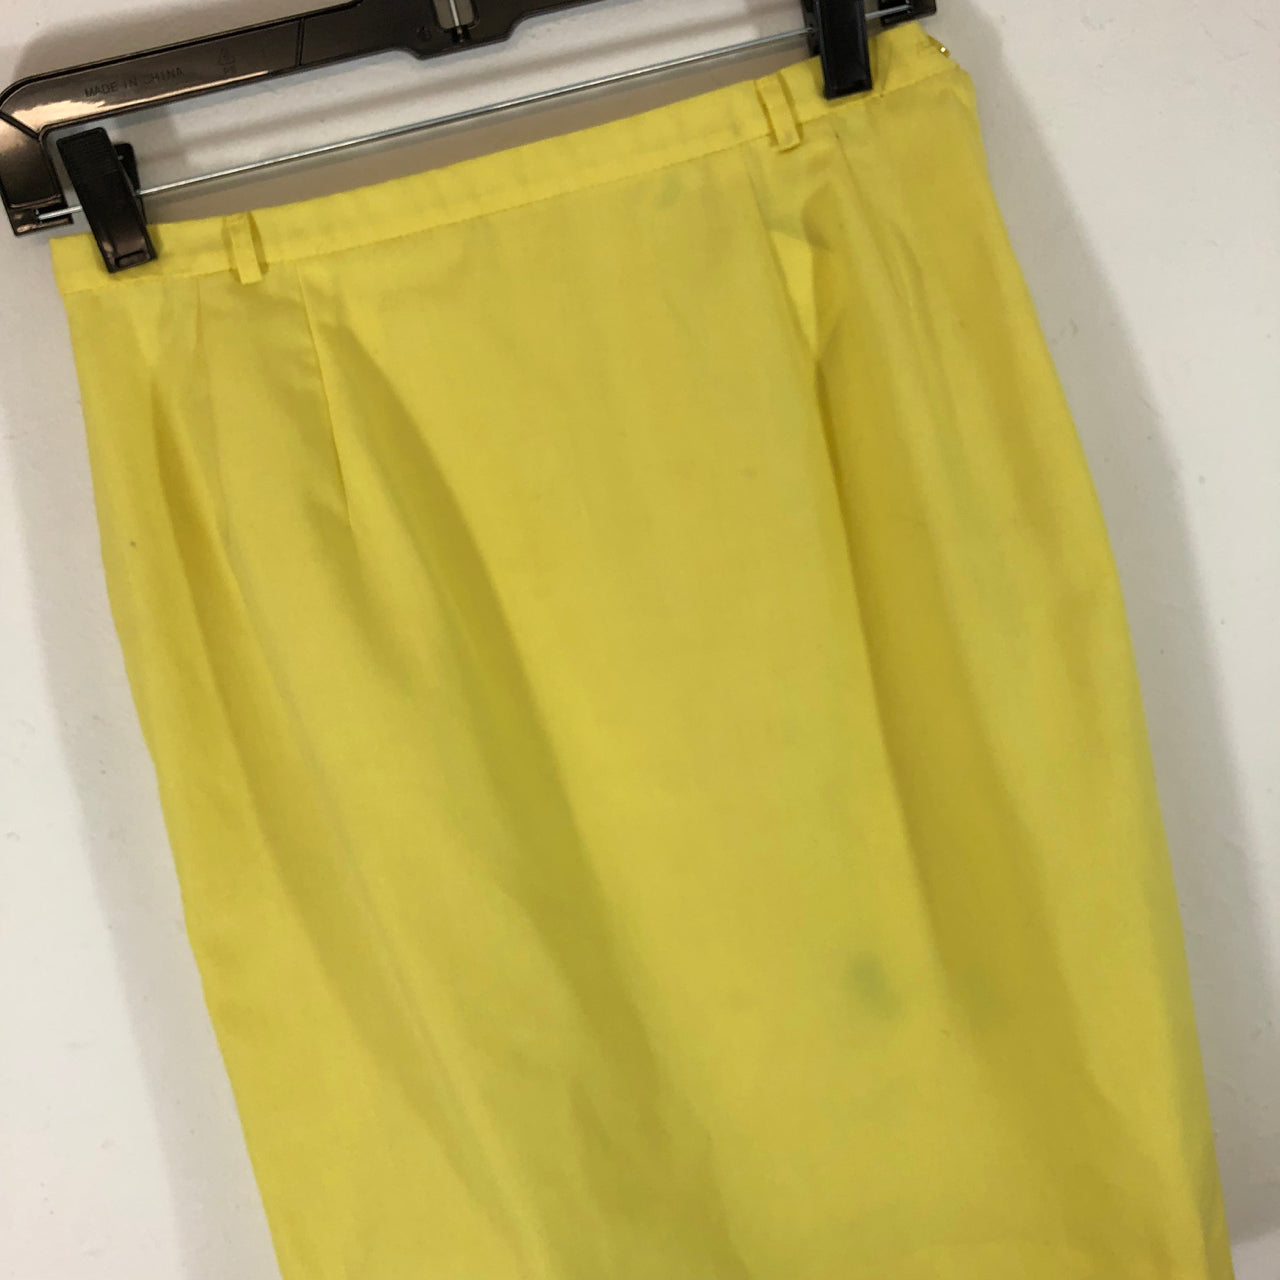 Jantzen Yellow Skirt